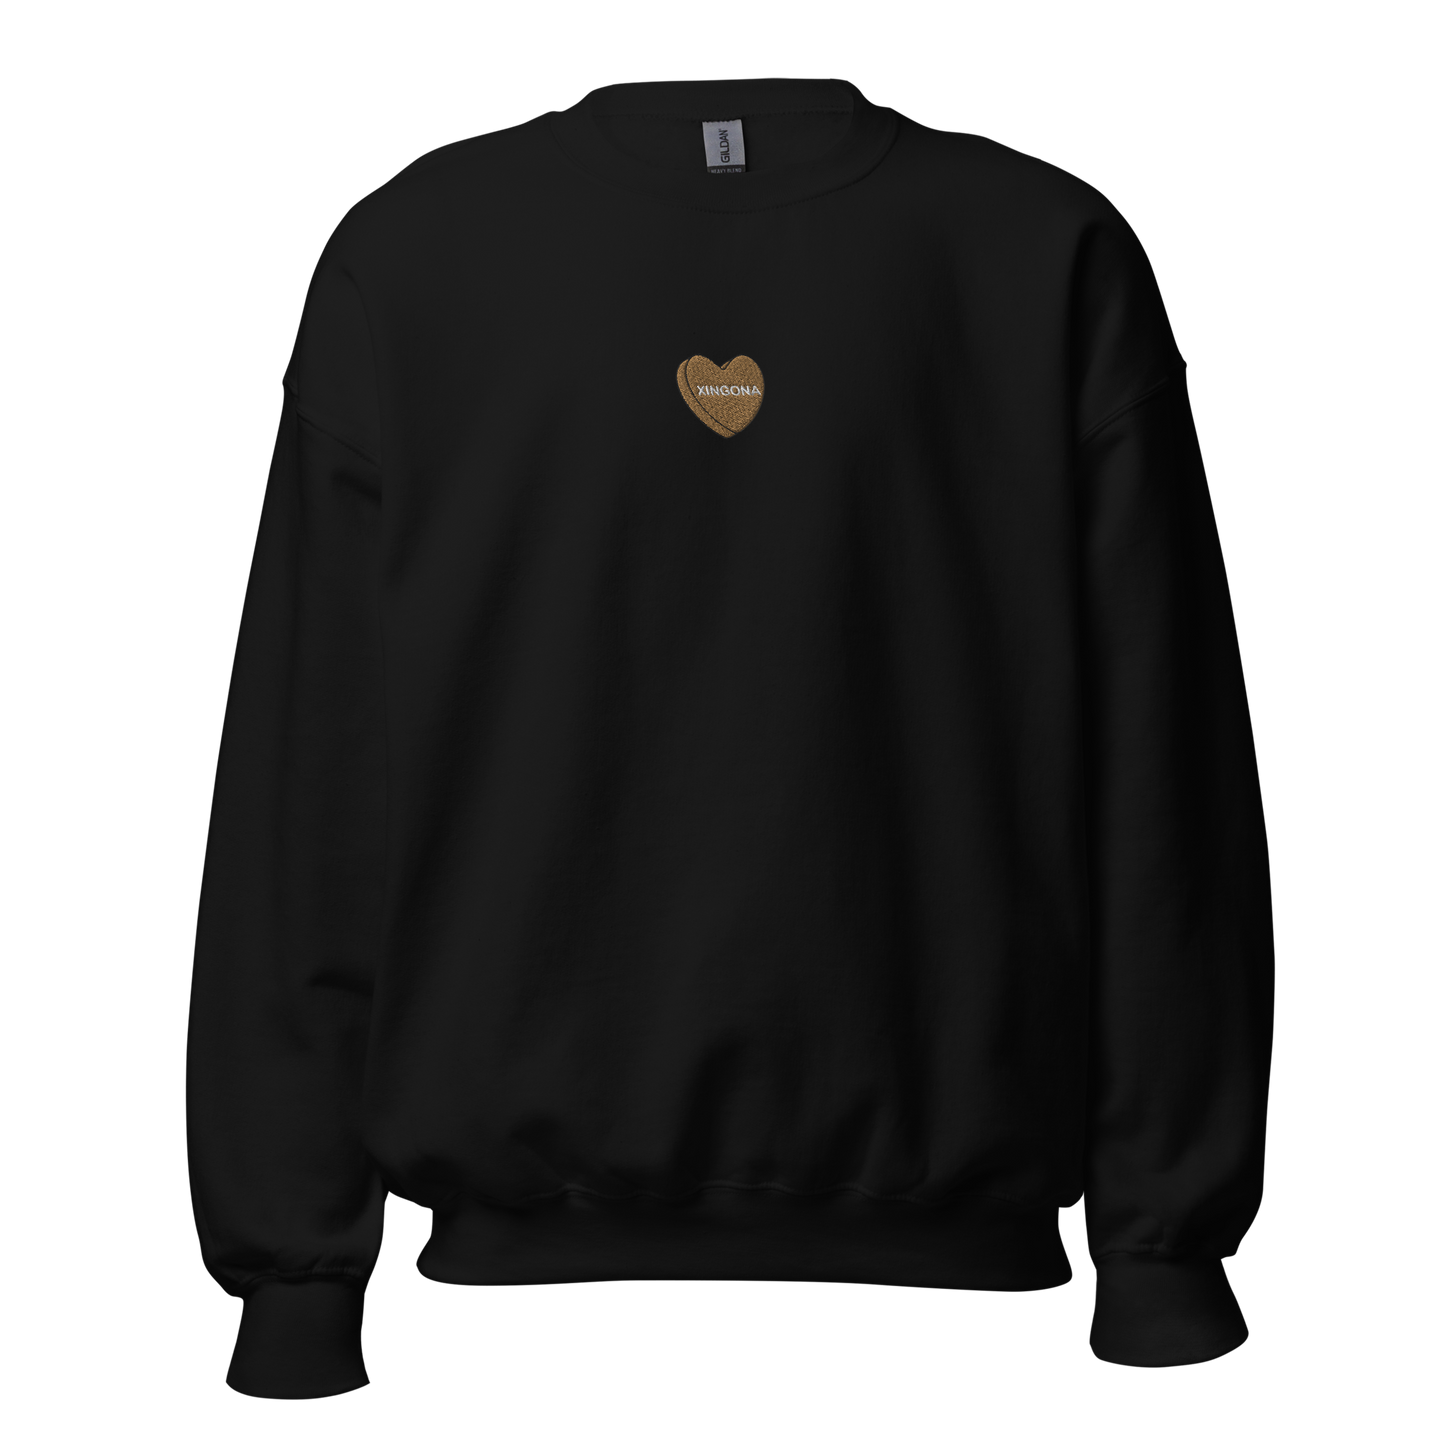 Xingona (Bad Ass) Candy Conversation Heart - Embroidered Unisex Sweatshirt